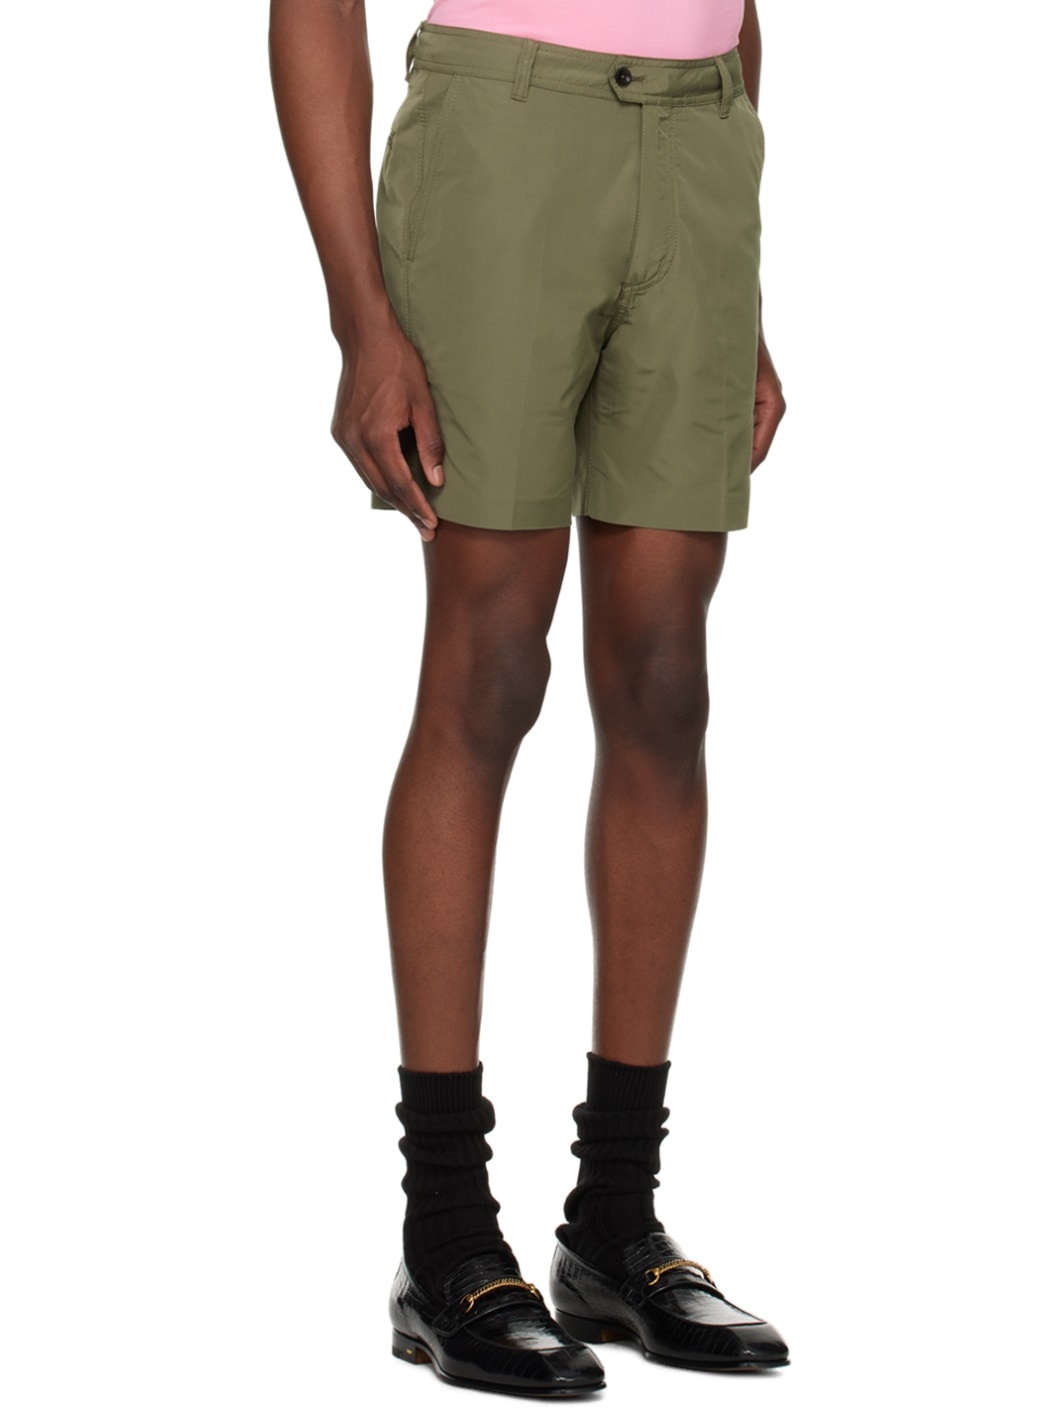 Green Technical Shorts - 2